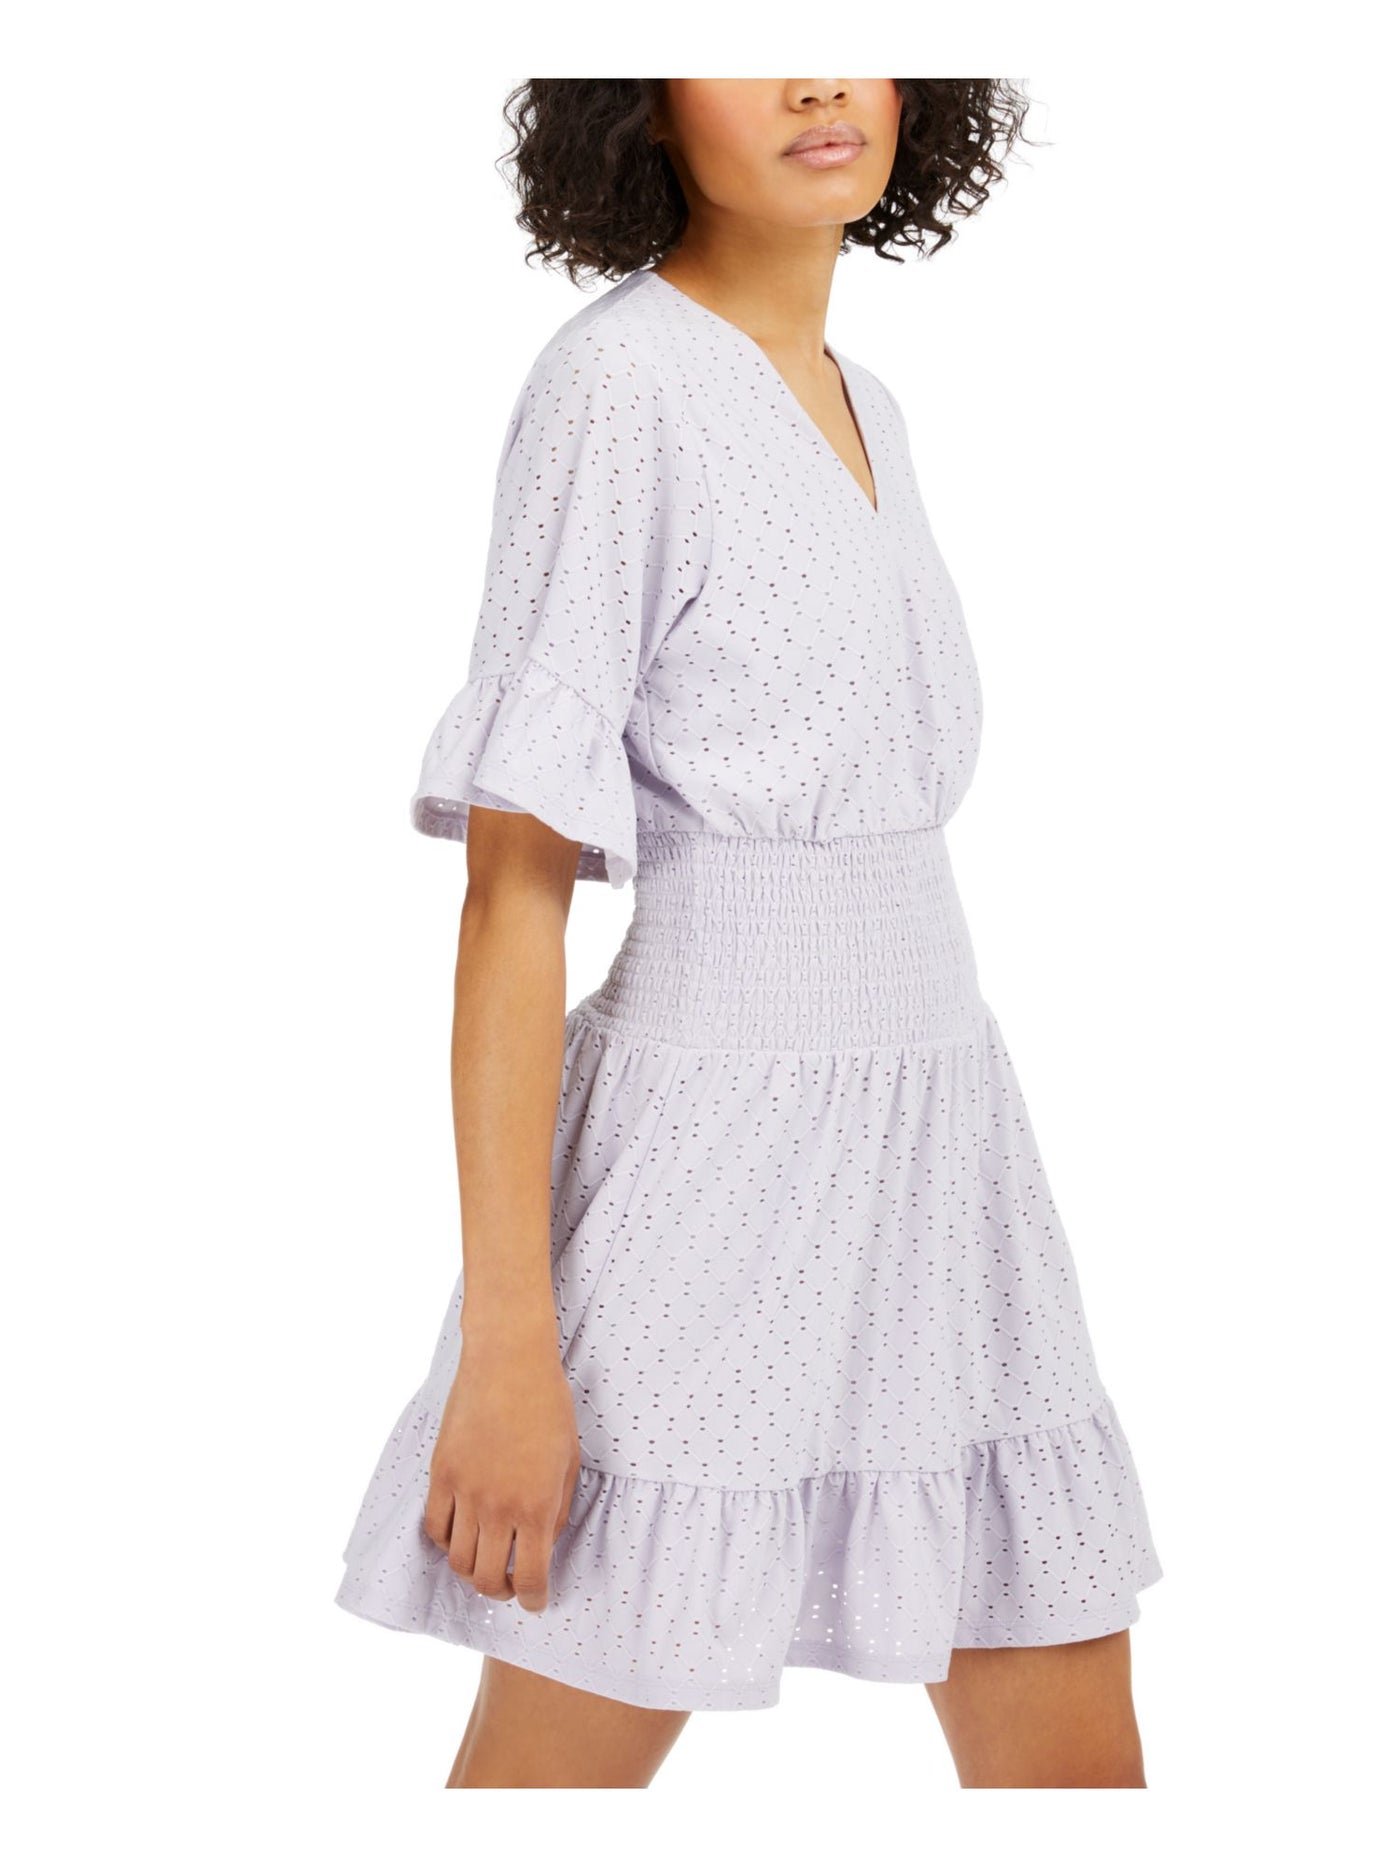 MICHAEL KORS Womens Purple Patterned Short Sleeve V Neck Micro Mini Empire Waist Dress S